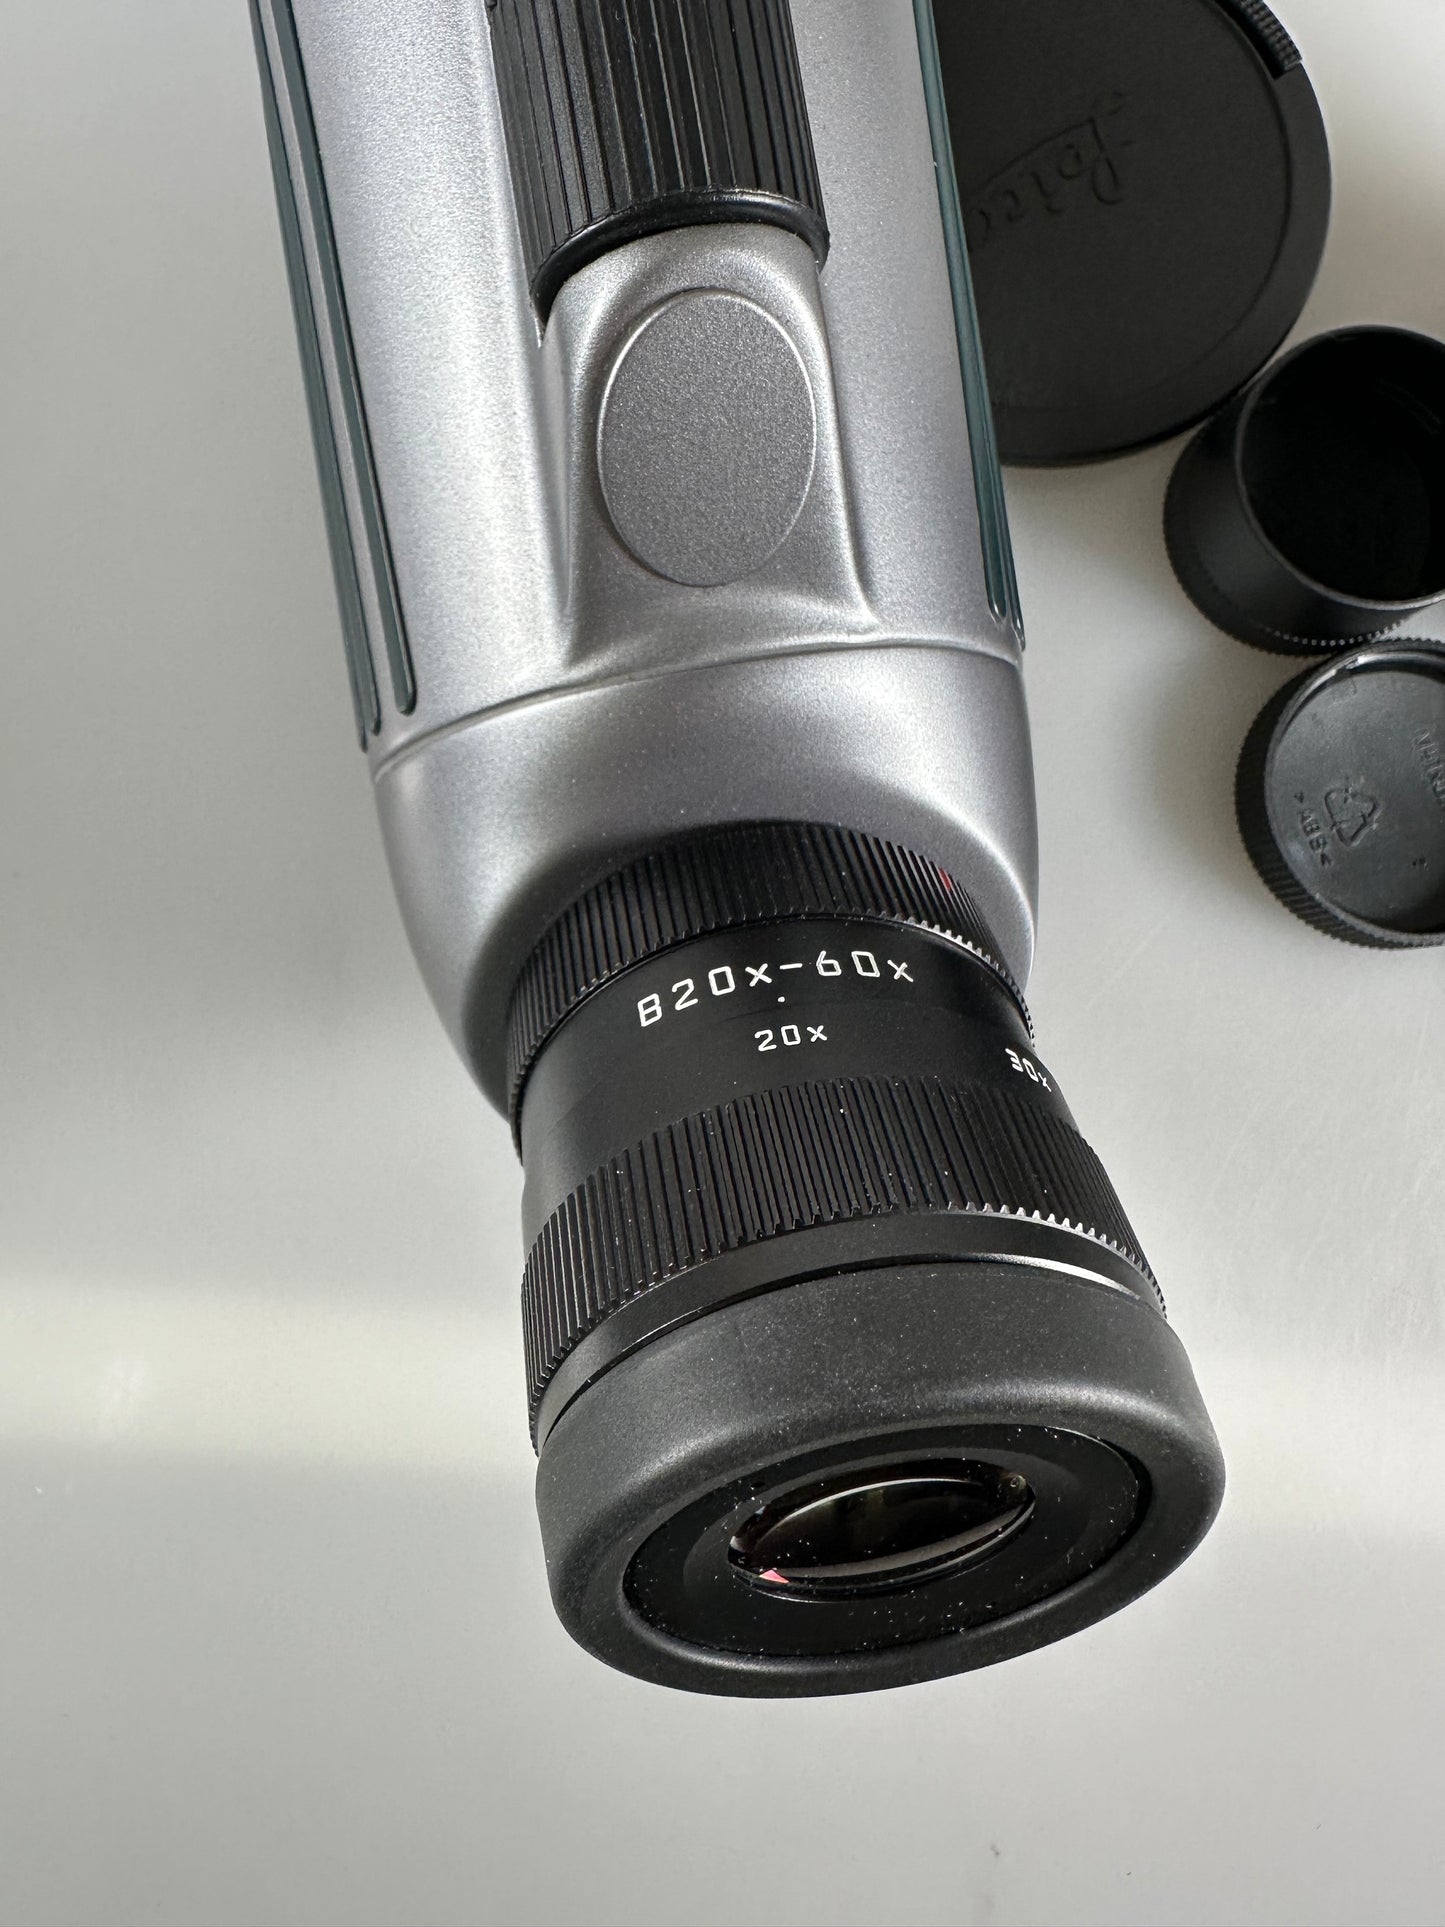 Leica APO Televid 77 spotting scope with case and B20x-60x eyepiece